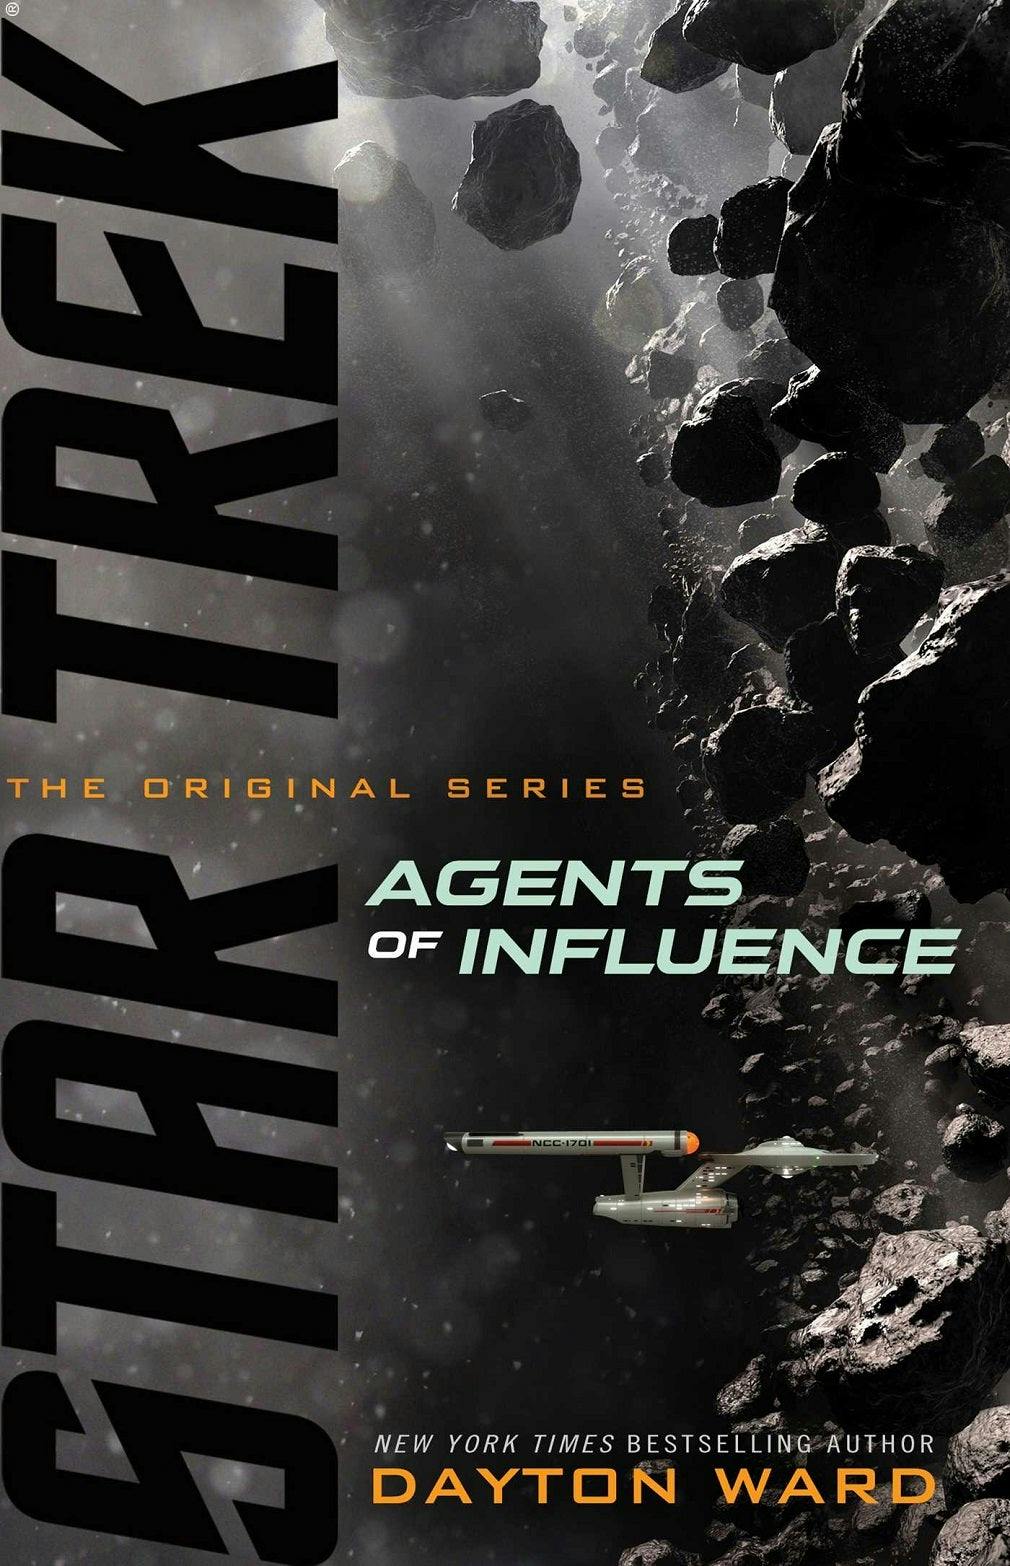 Star Trek: The Original Series - Agents of Influence